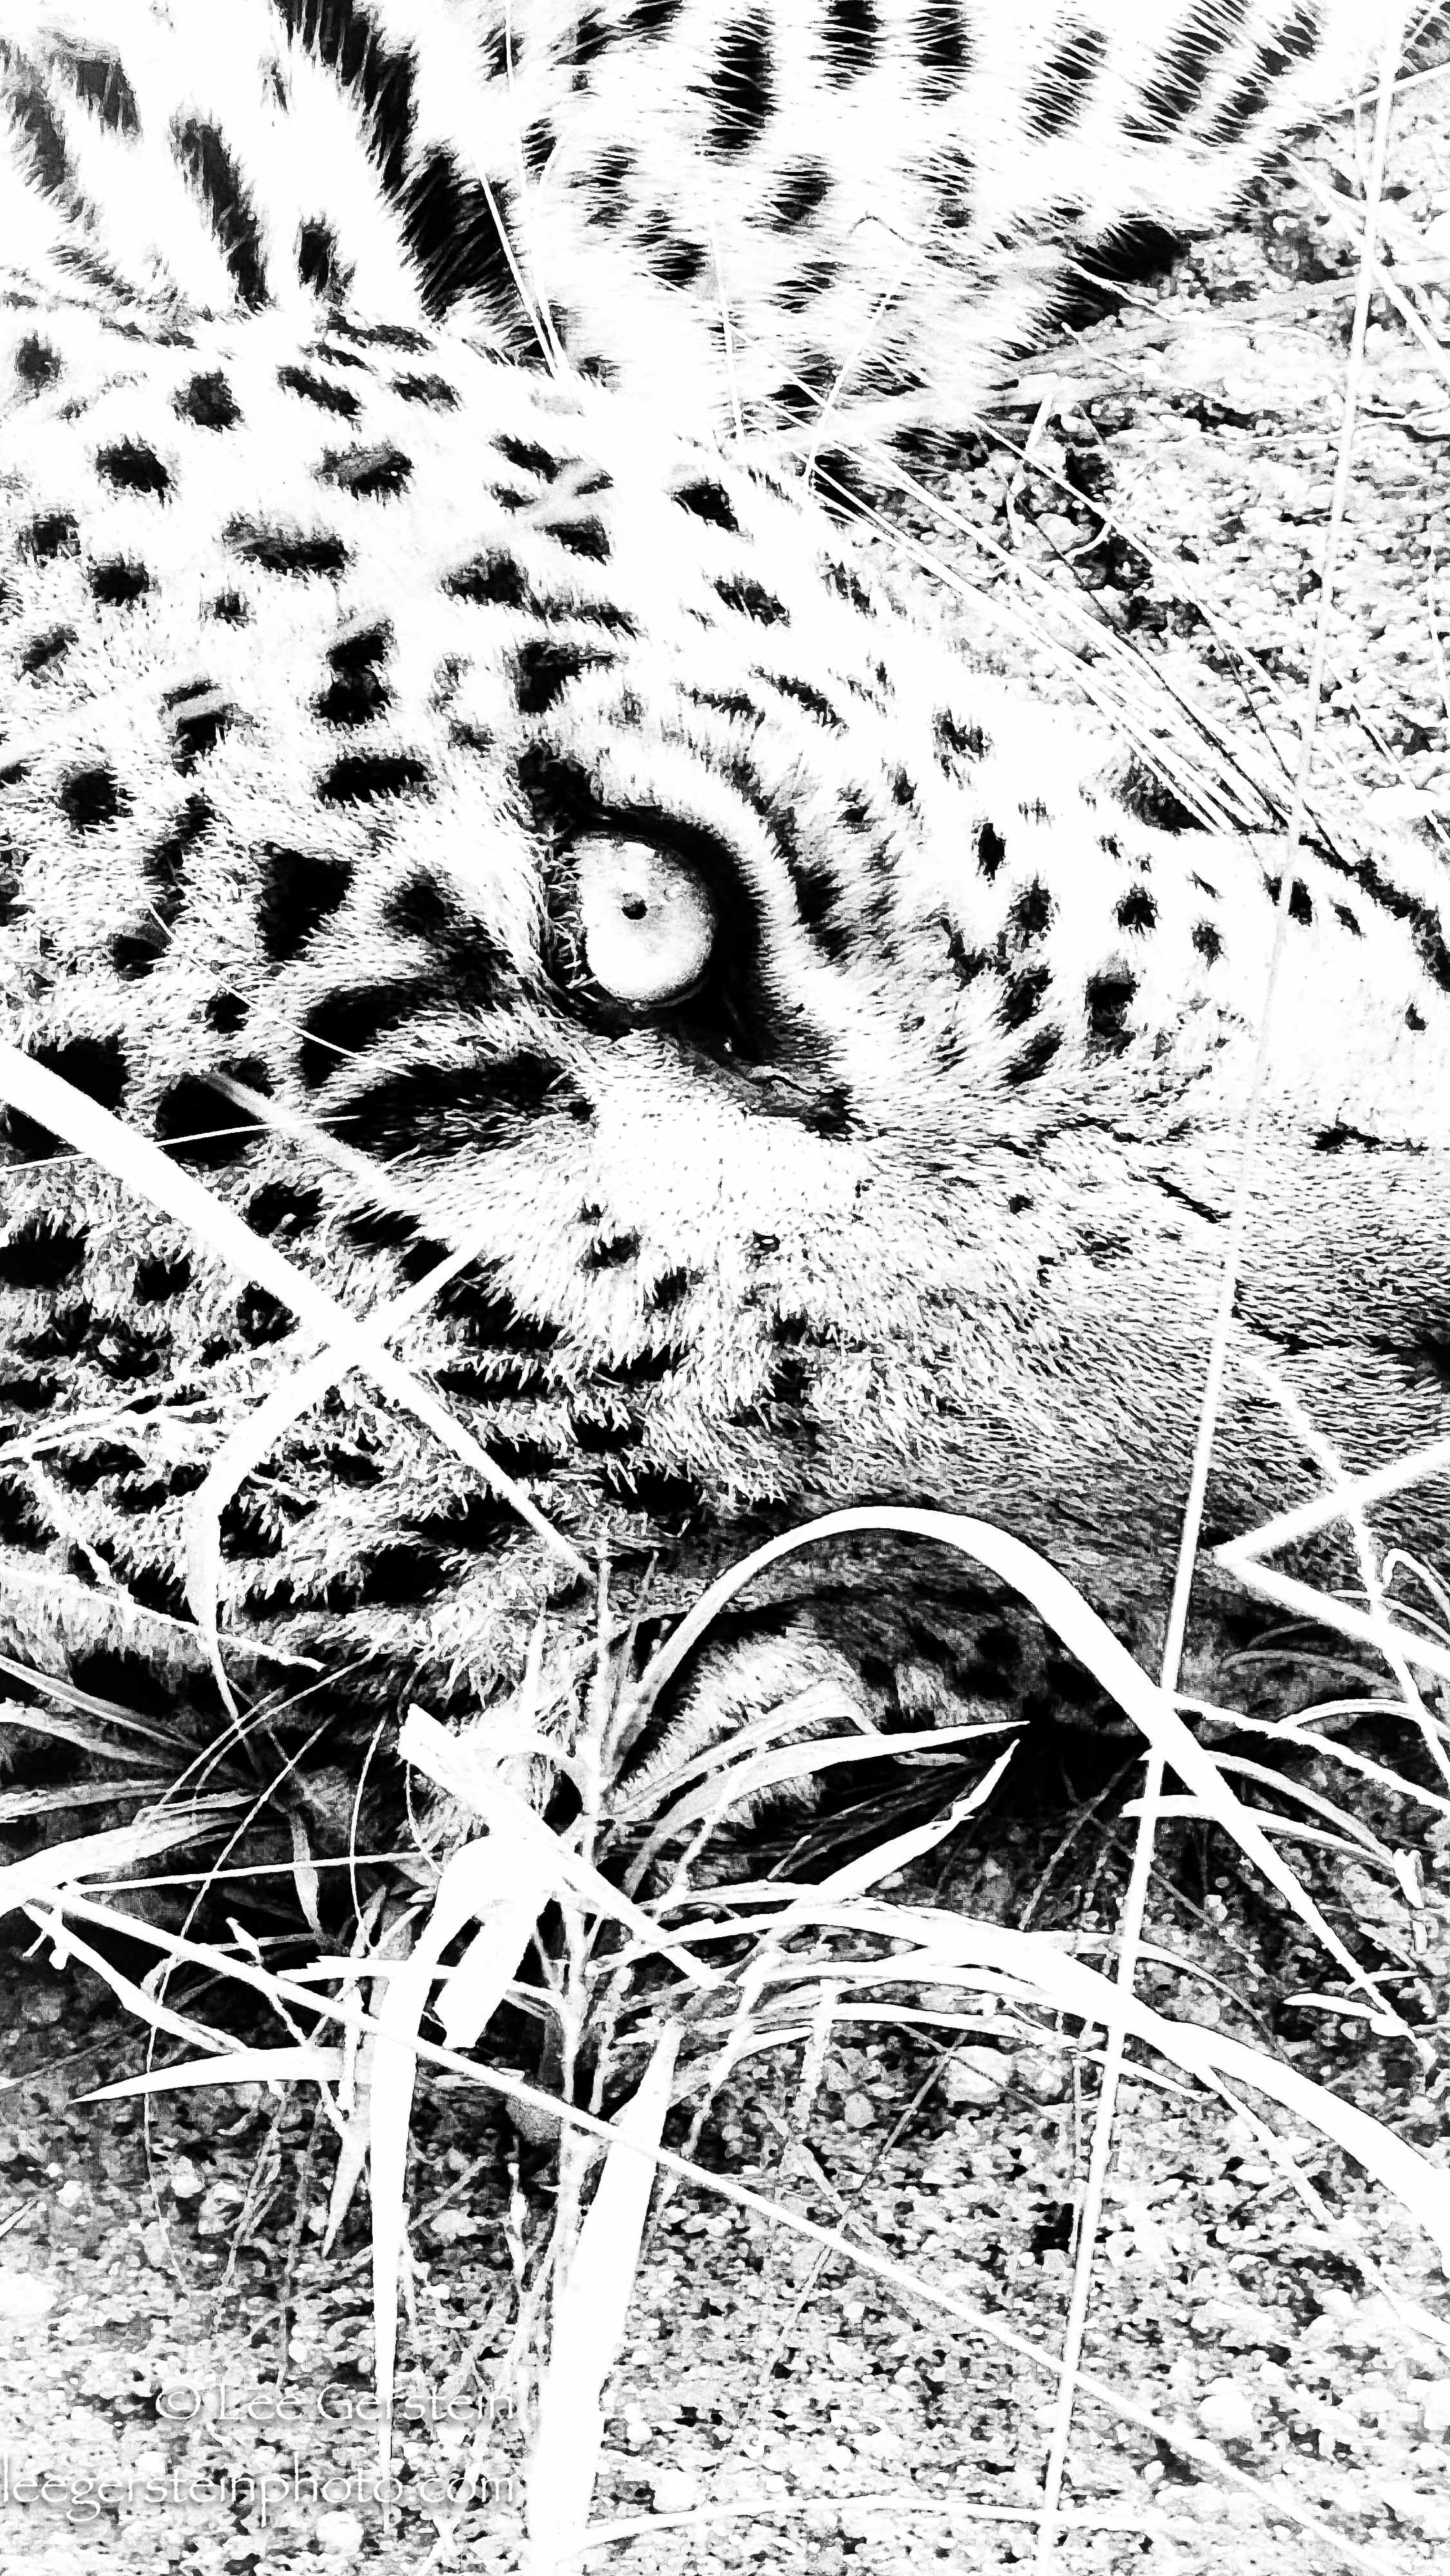 Leopard b&w highest contrast.jpg